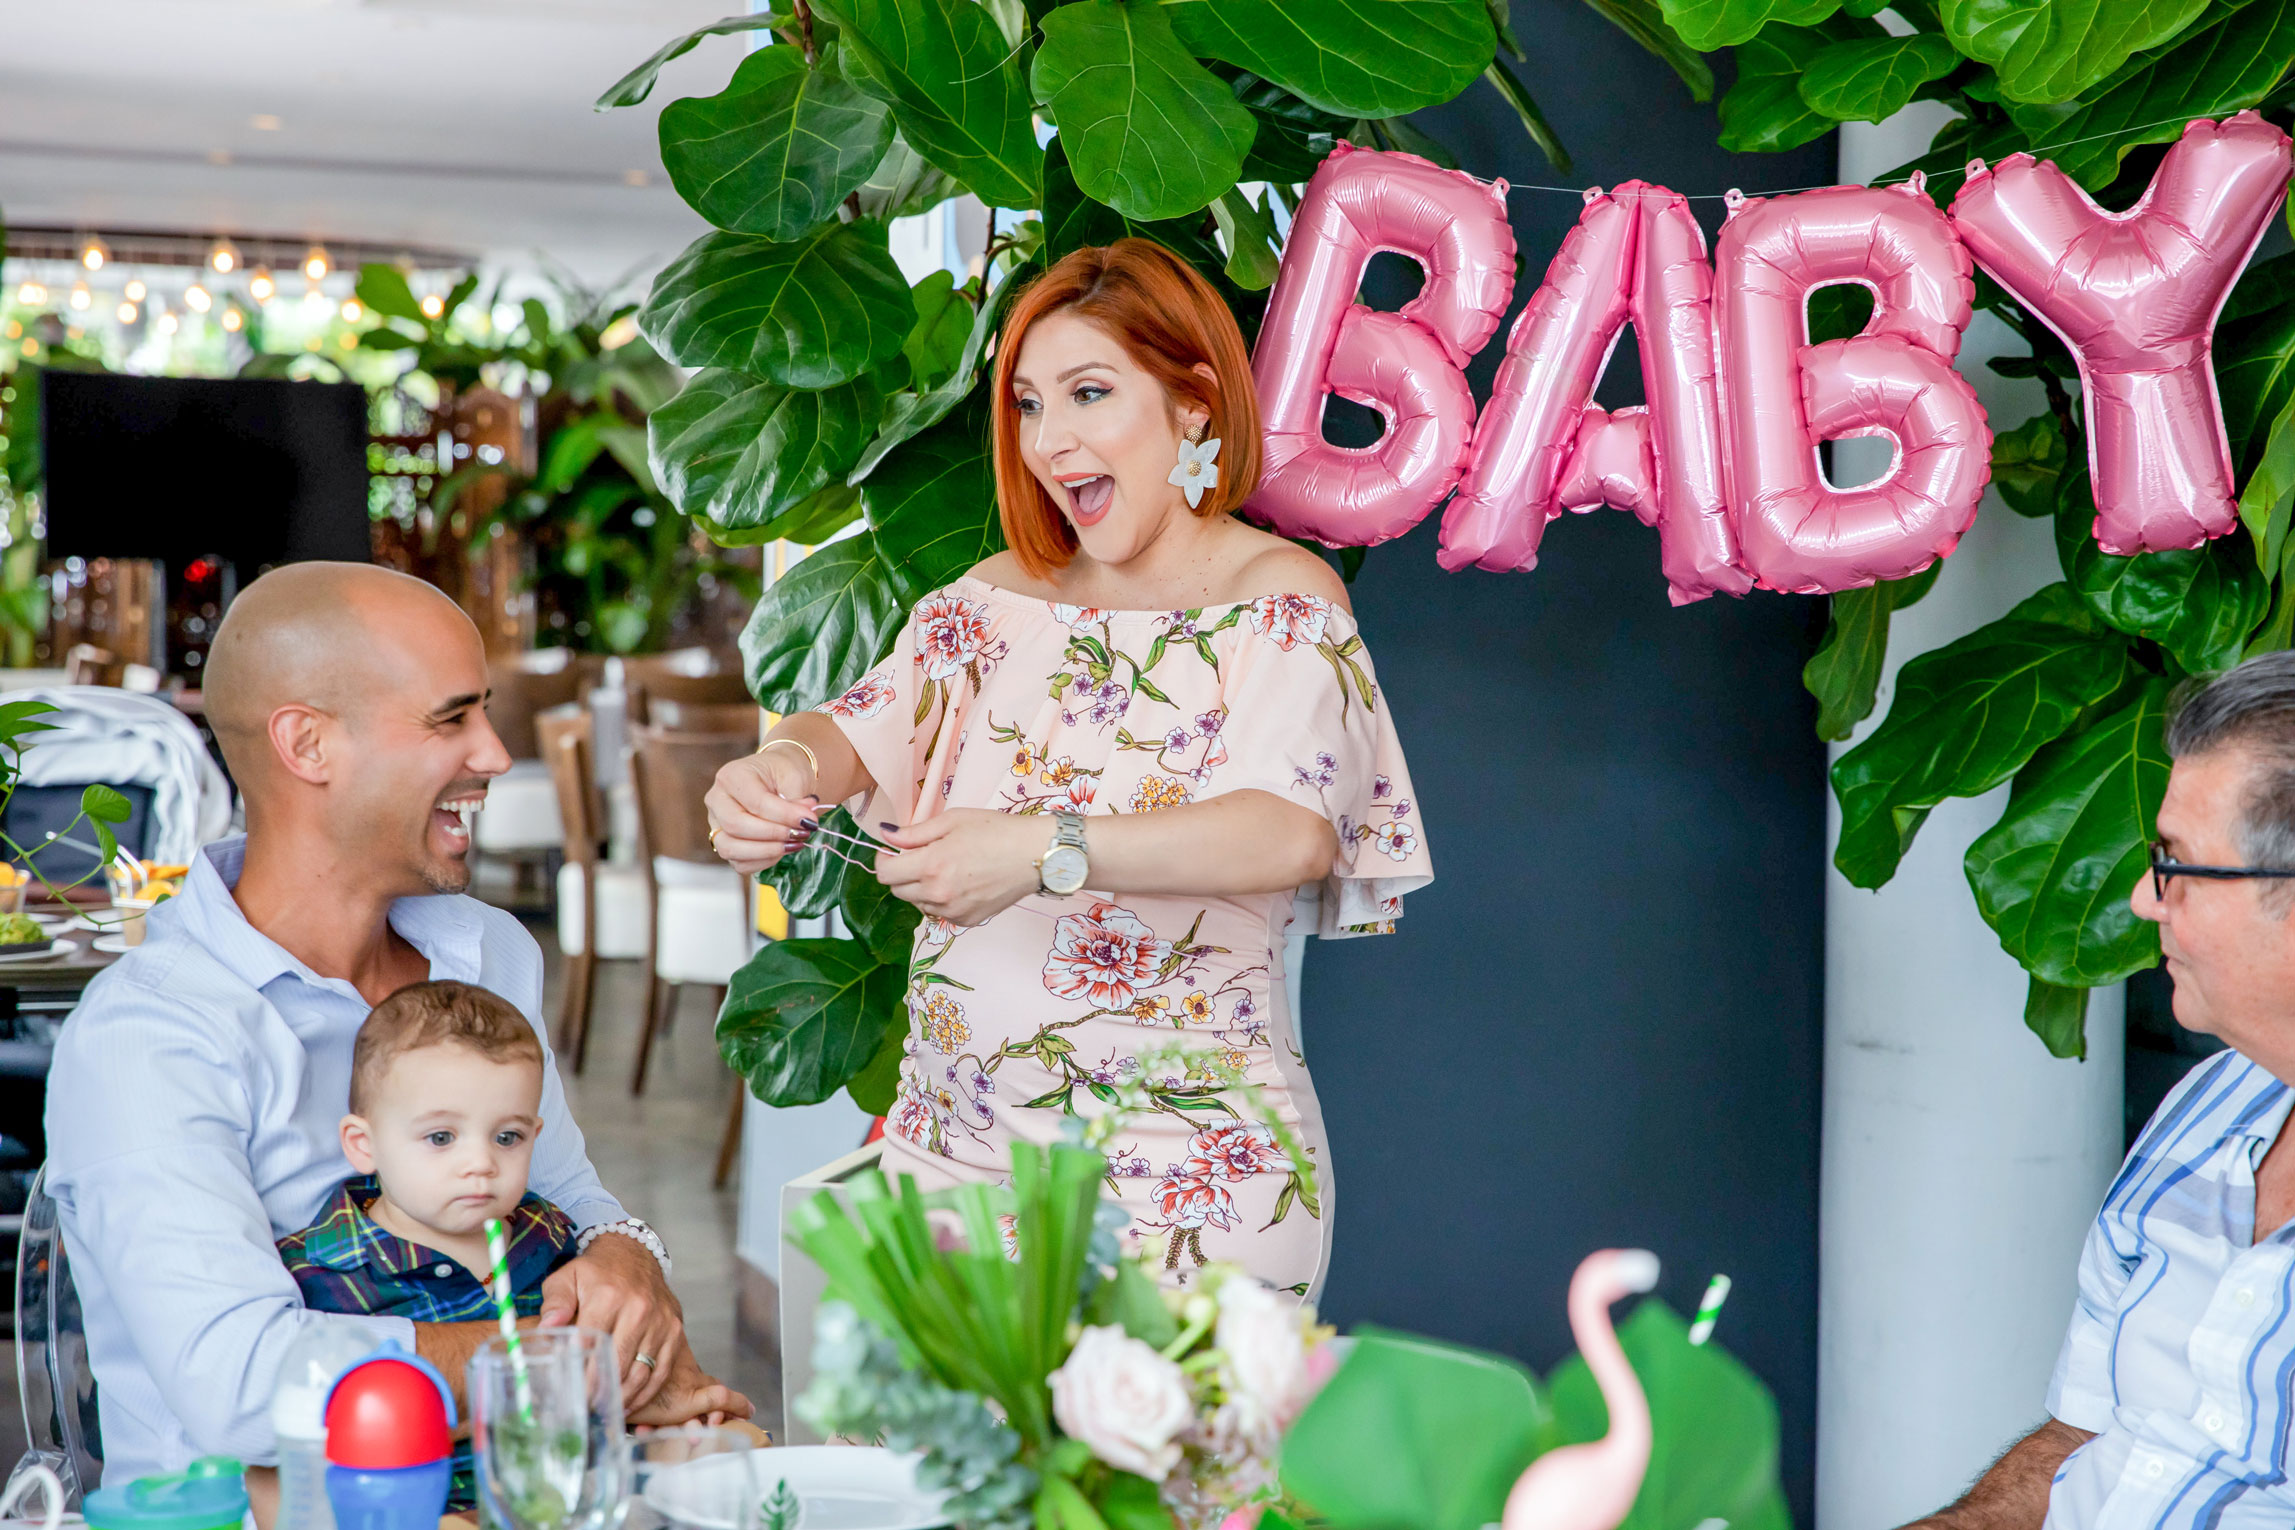 Blame it on Mei, @blameitonmei, Miami Fashion Mom Blogger, flamingo tropical baby shower theme